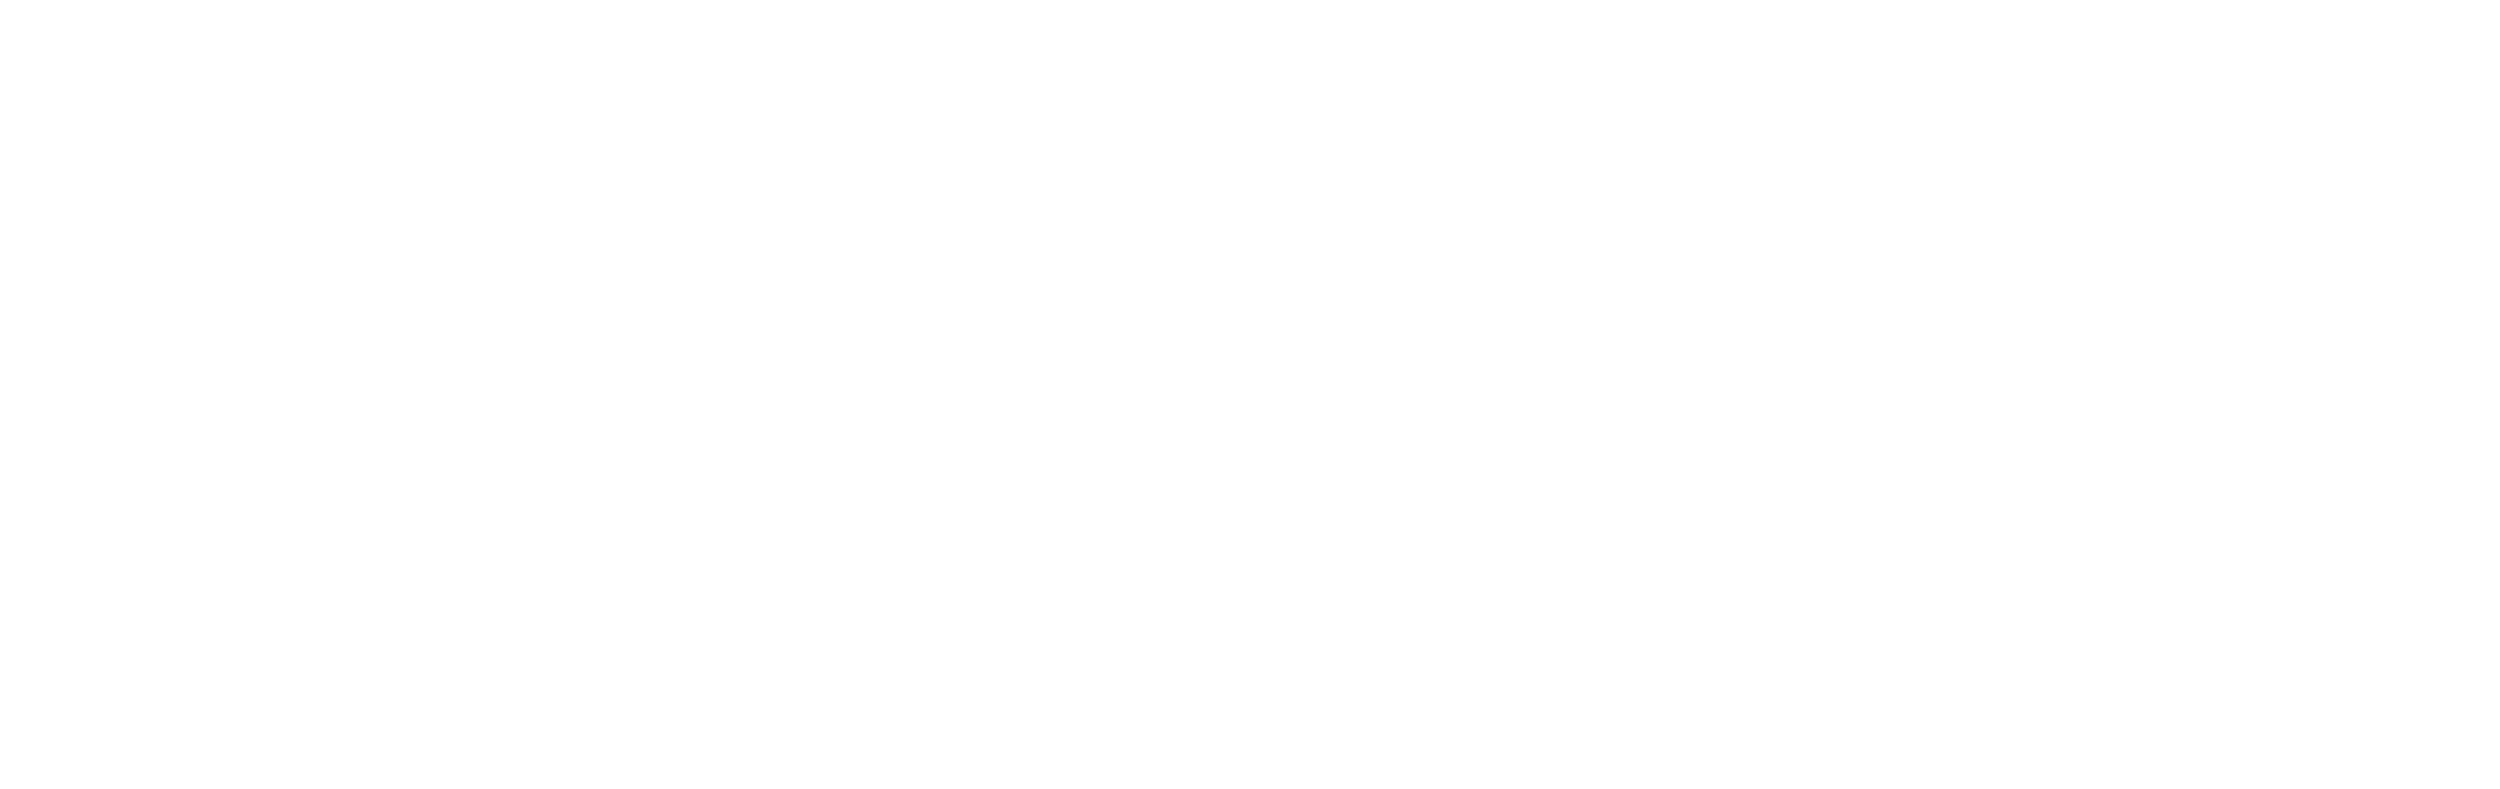 The Norwood Theatre